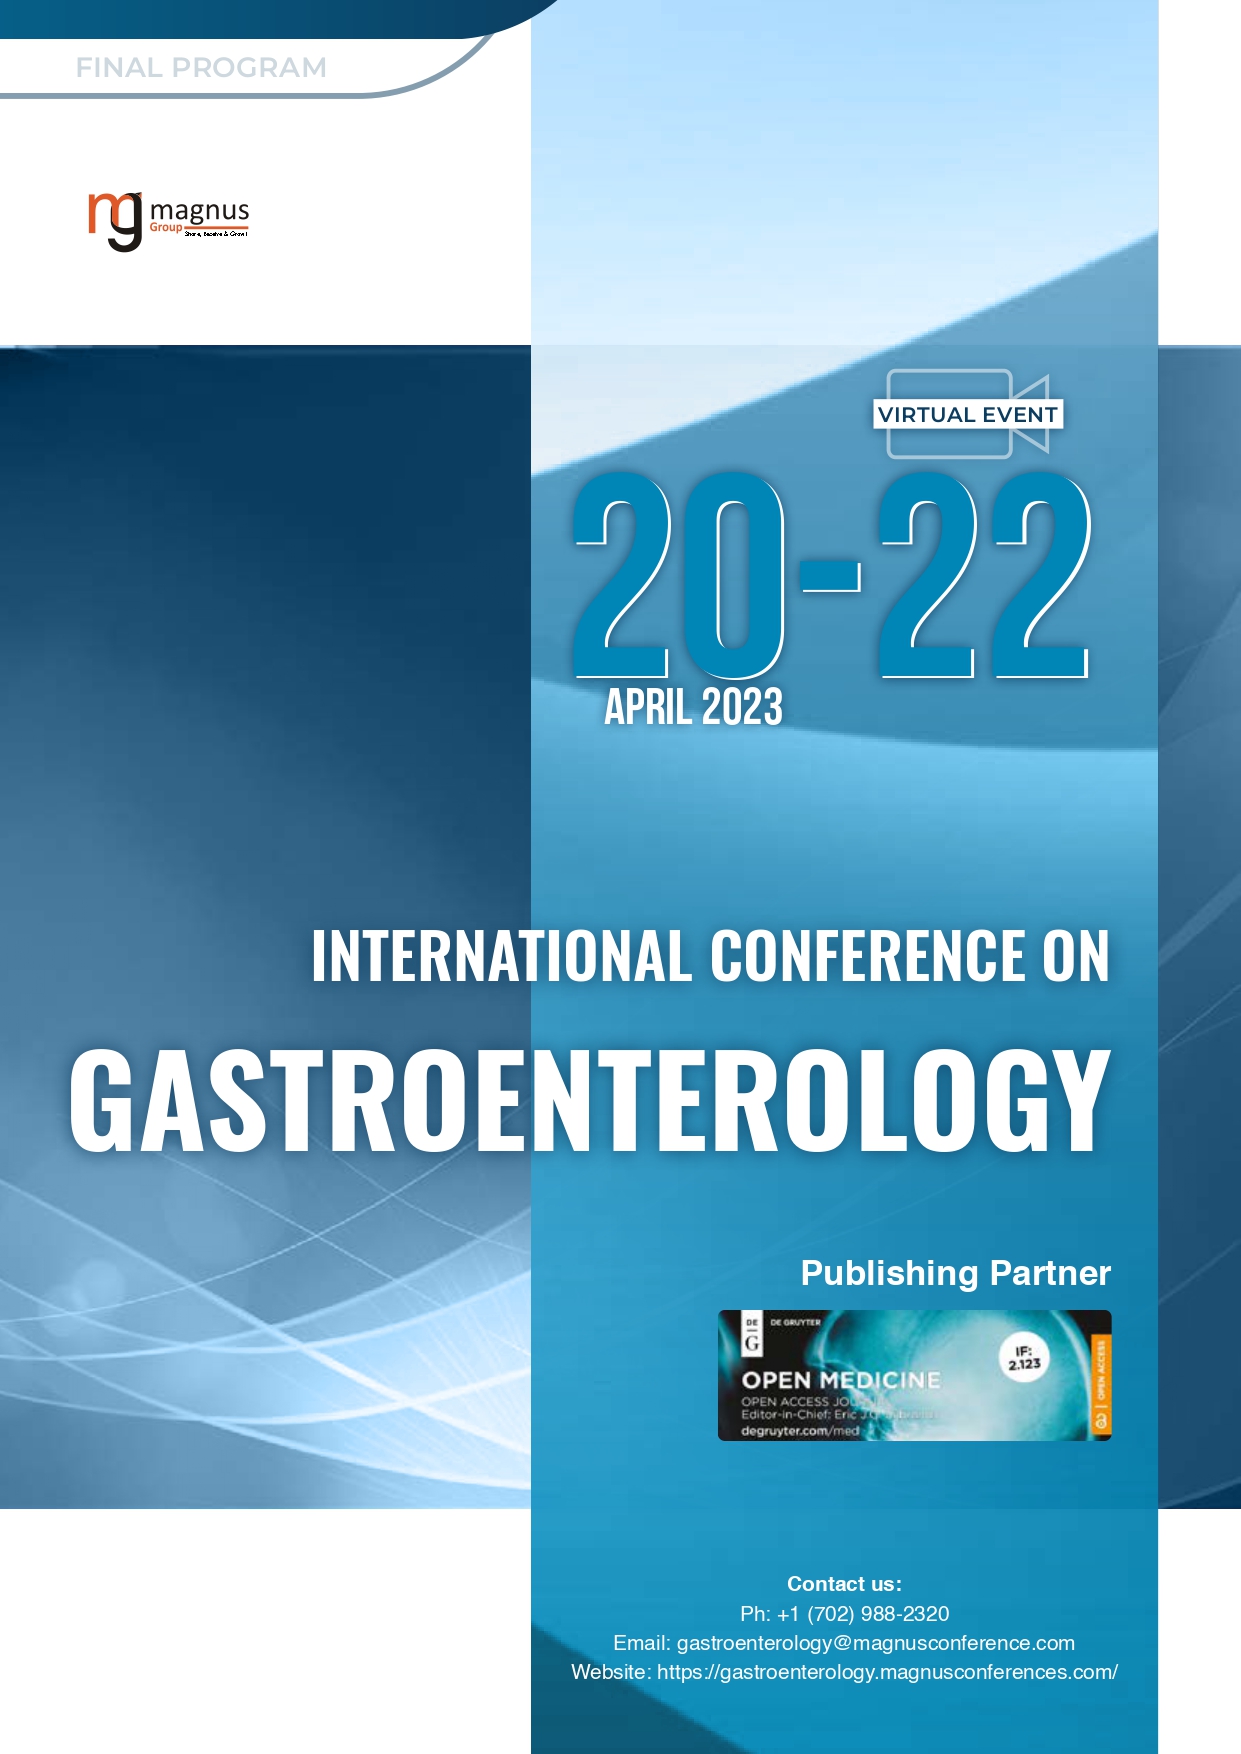 International Conference on Gastroenterology | Virtual Event Program